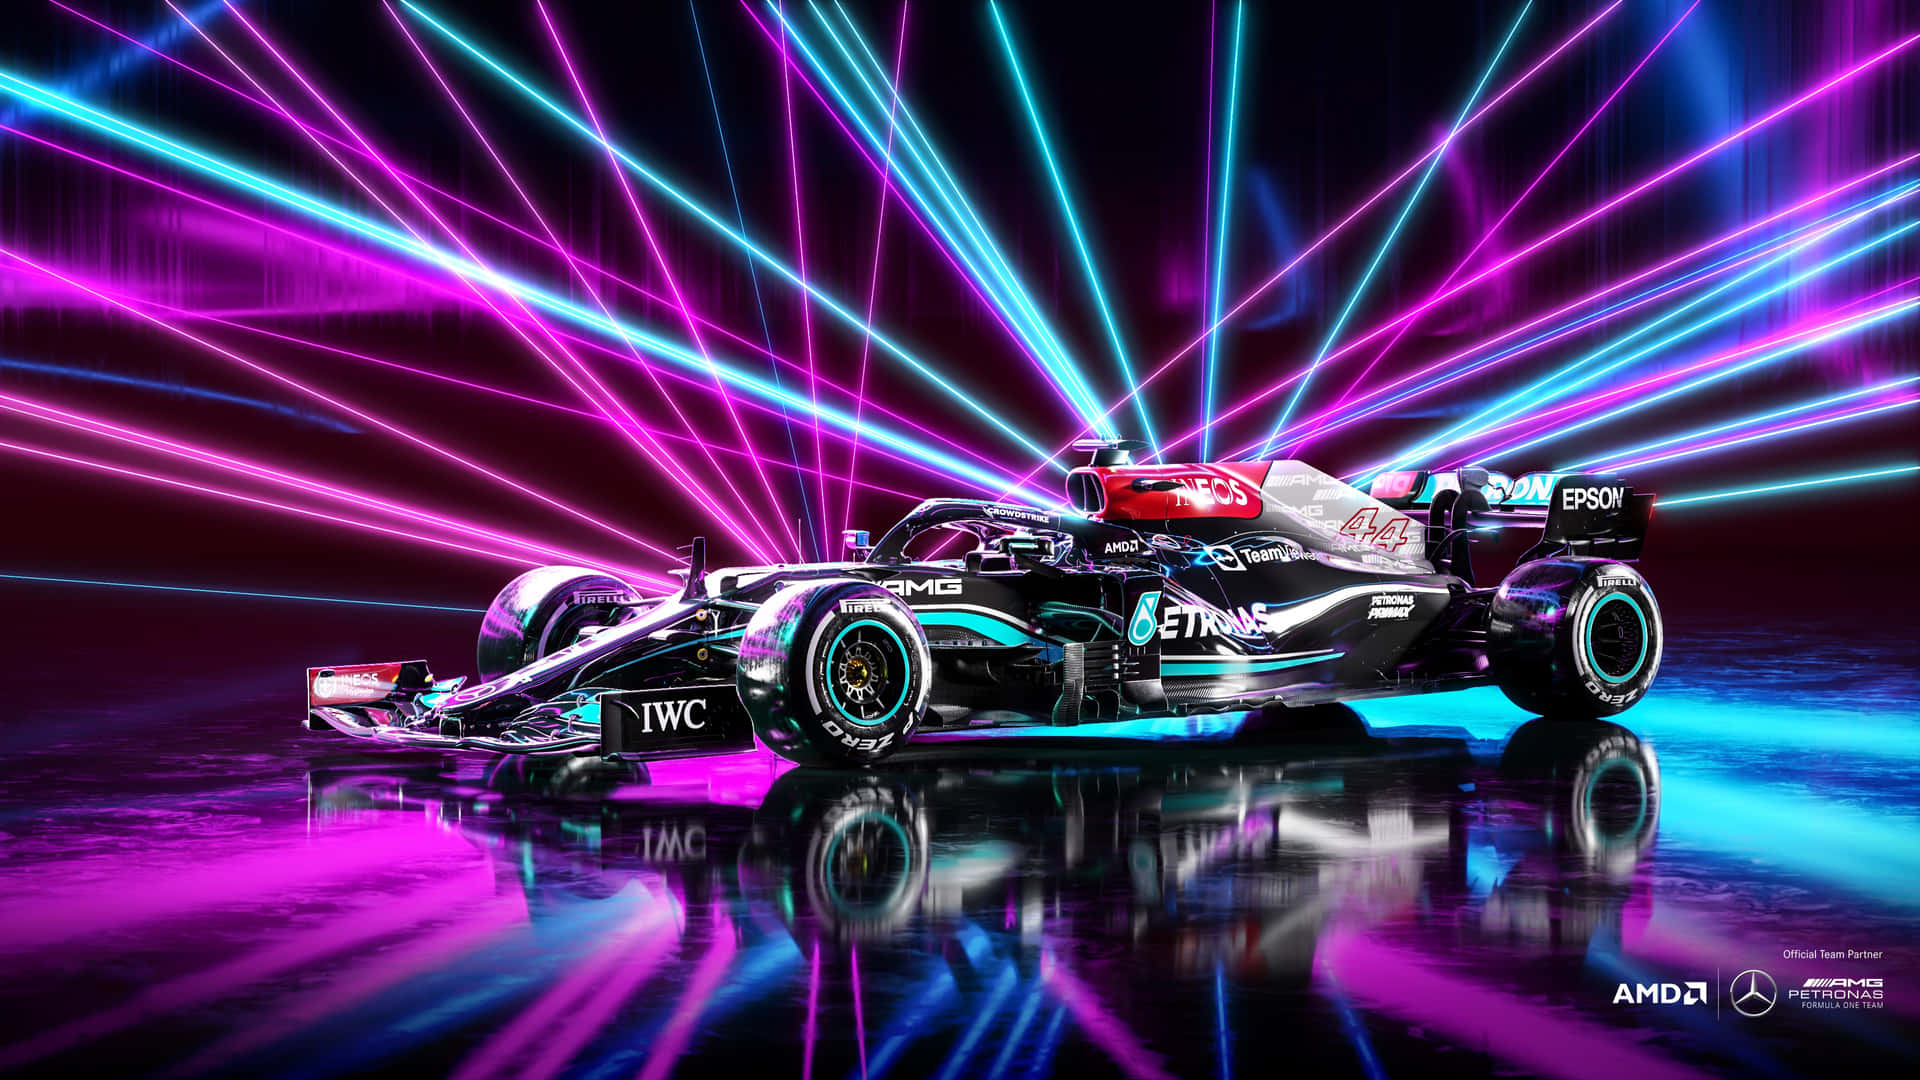 Uncoche De Fórmula 1 De Mercedes Con Luces De Neón En El Fondo. Fondo de pantalla